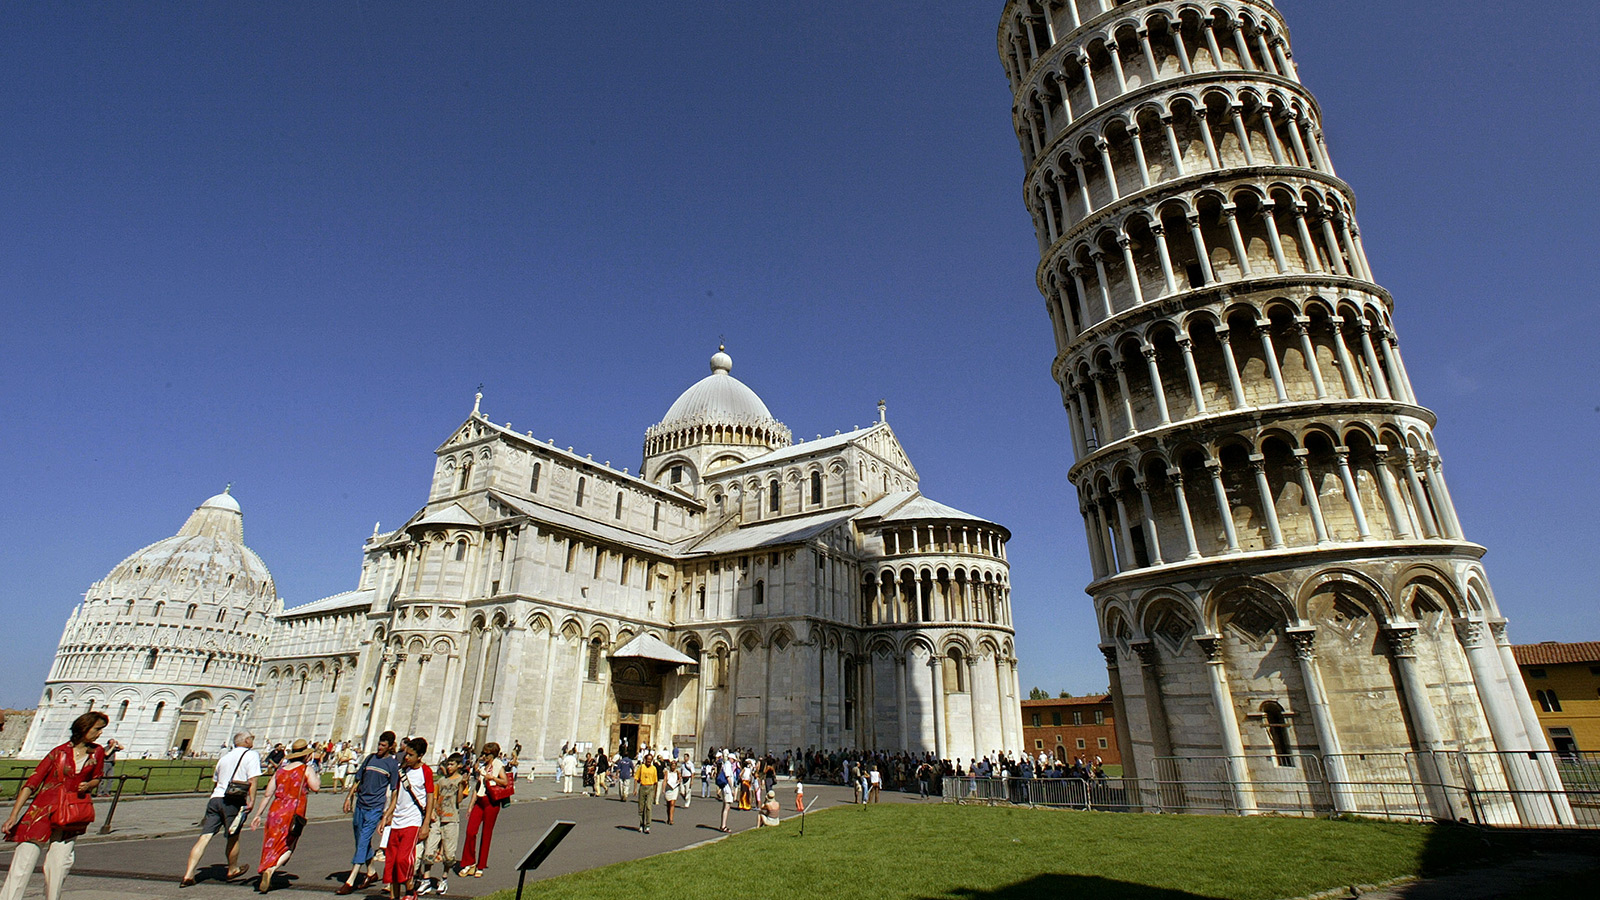 برج کج پیزا؛ اوج شکوه و عظمت معماری ایتالیا